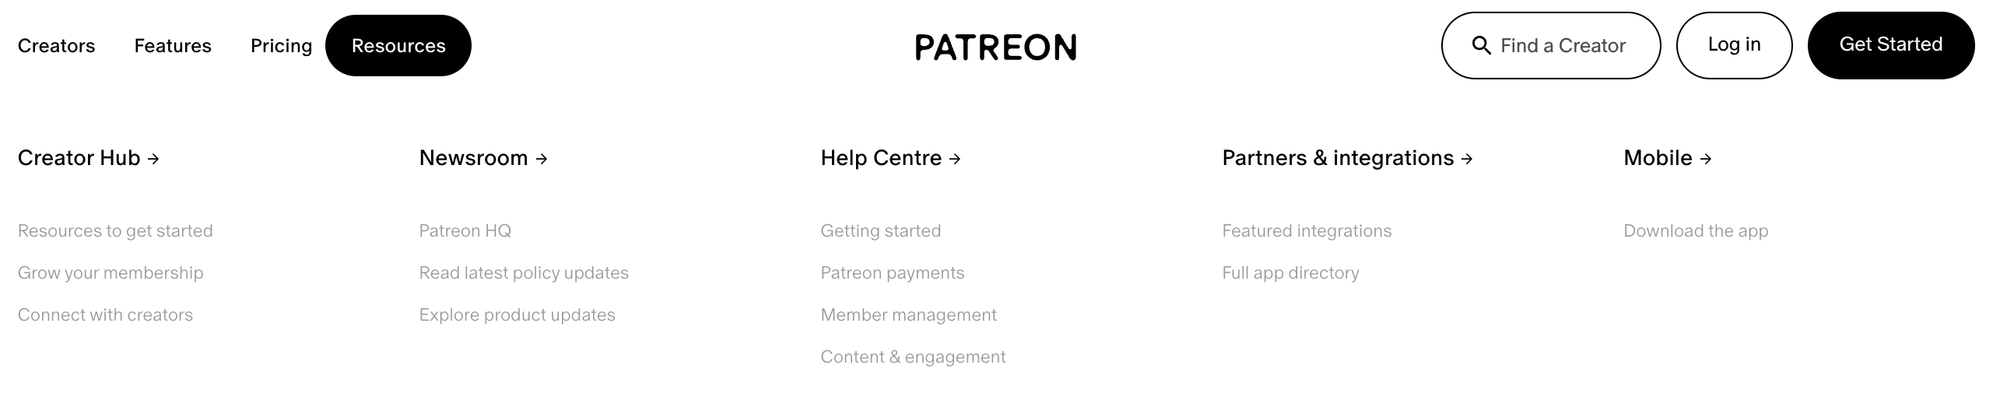 patreon users